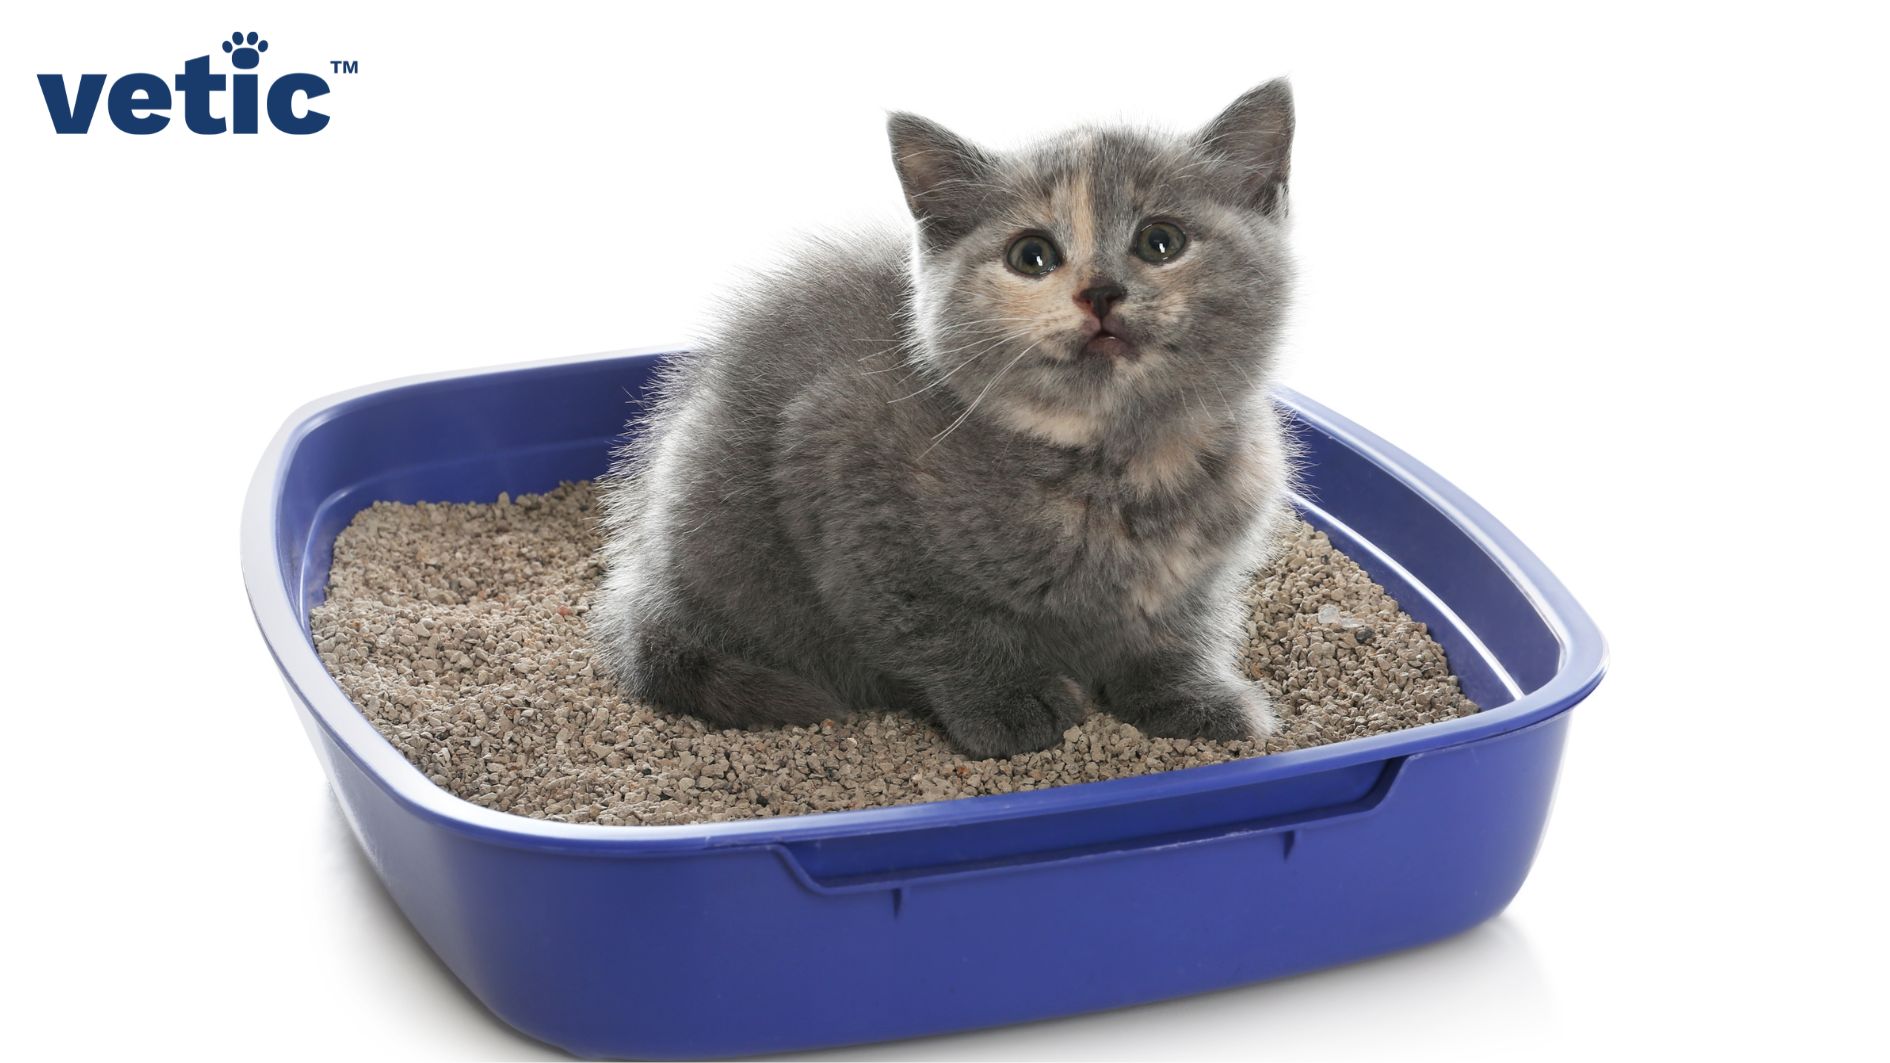 Tiny grey and light orange tortoise shell kitten sitting inside a small blue litter box filled with bentonite litter